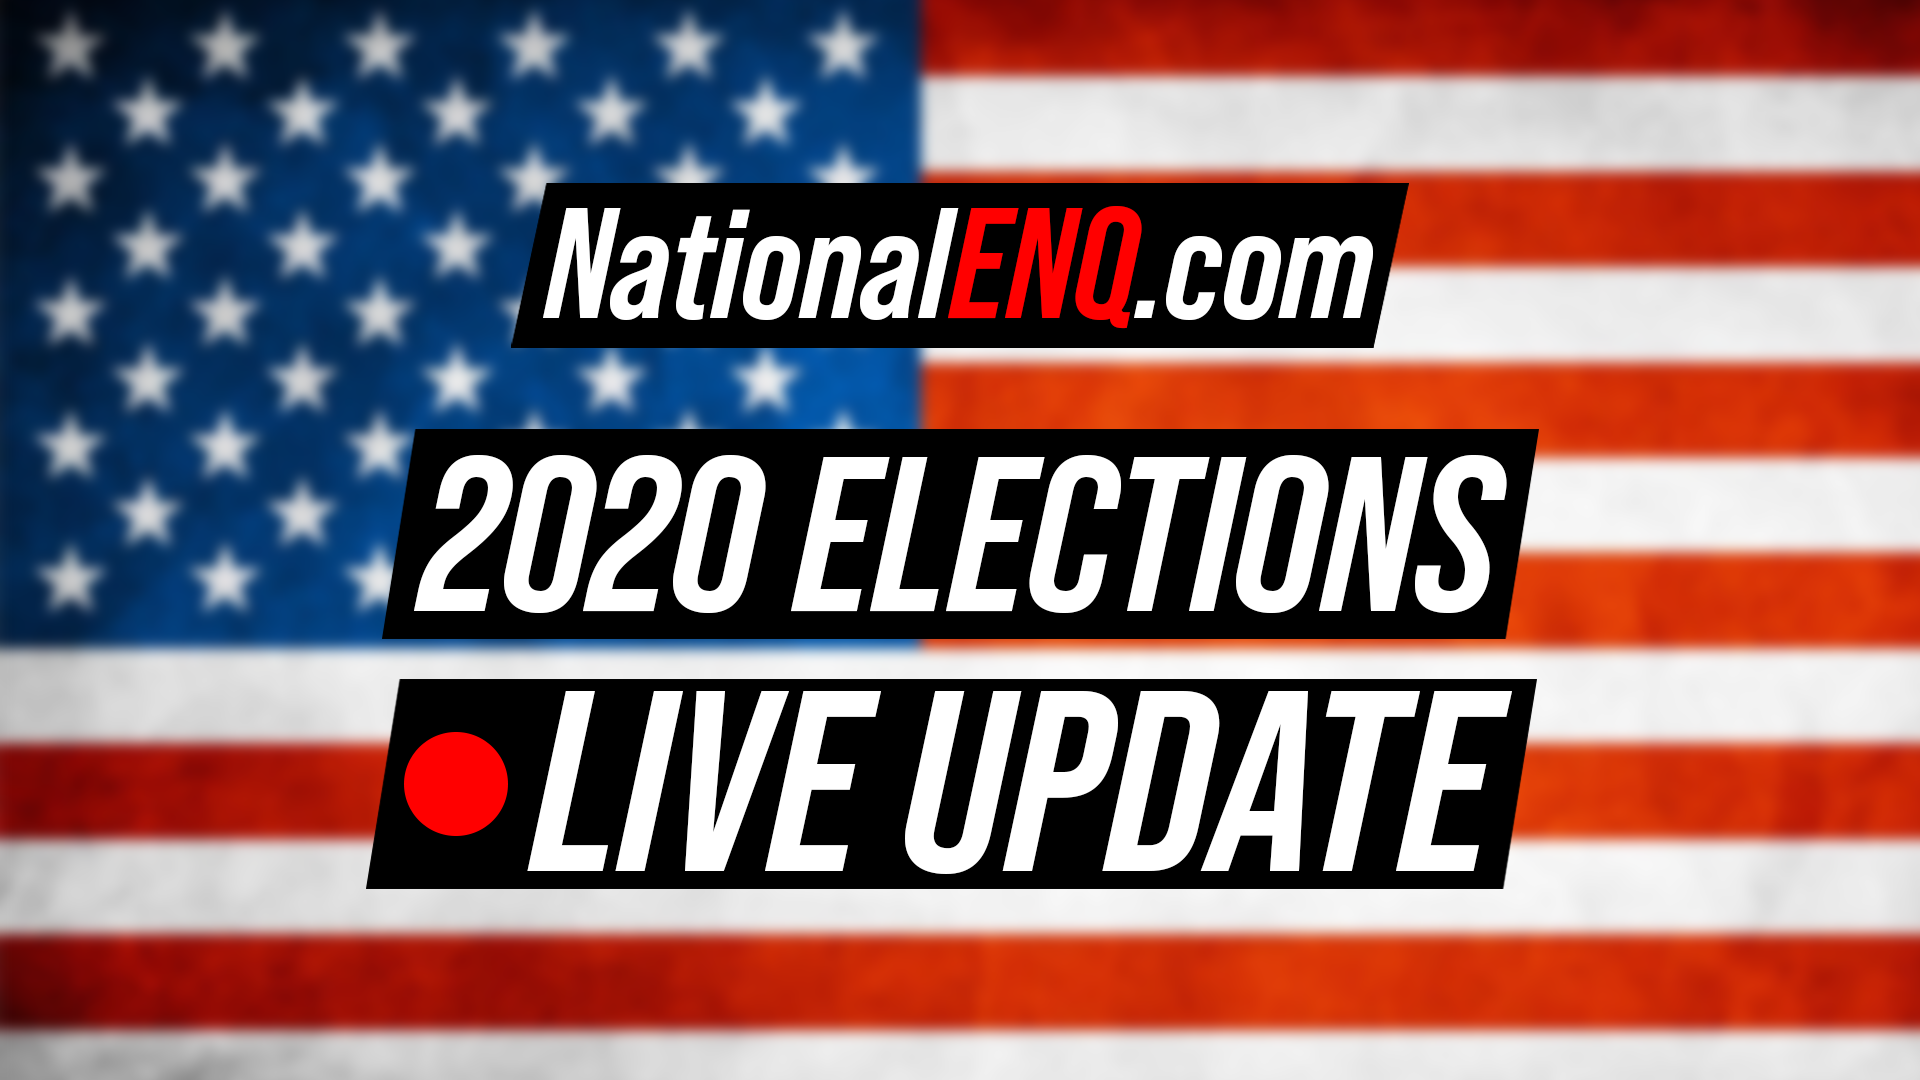 National ENQ U.S. 2020 Elections Live Update: Trump, Biden & Coronavirus